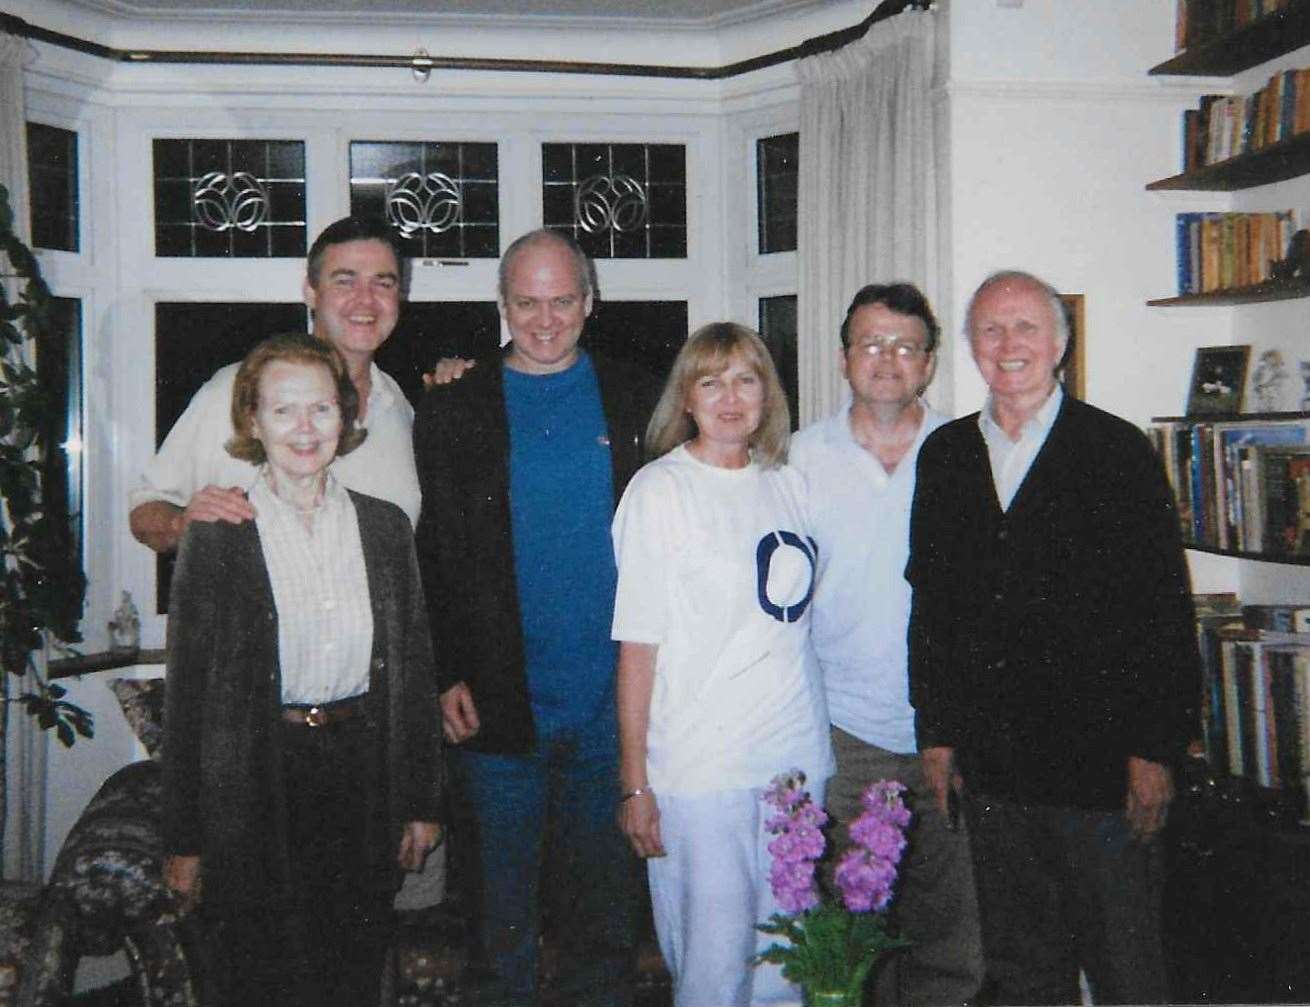 Family photo: (L-R) Veronica, Jamie, David, Rosemary, Duncan and Edward